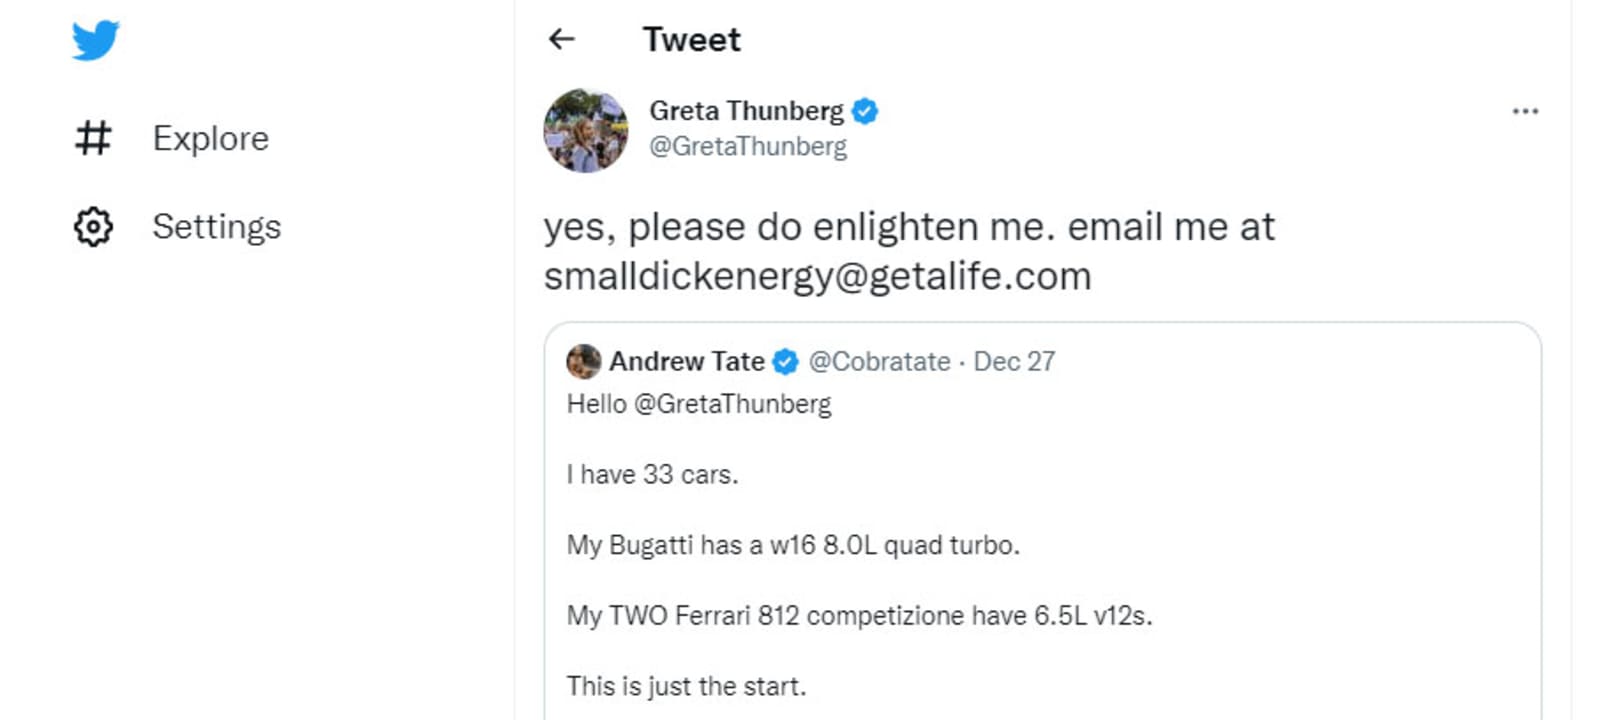 Twitter reactions to Greta Thunberg response